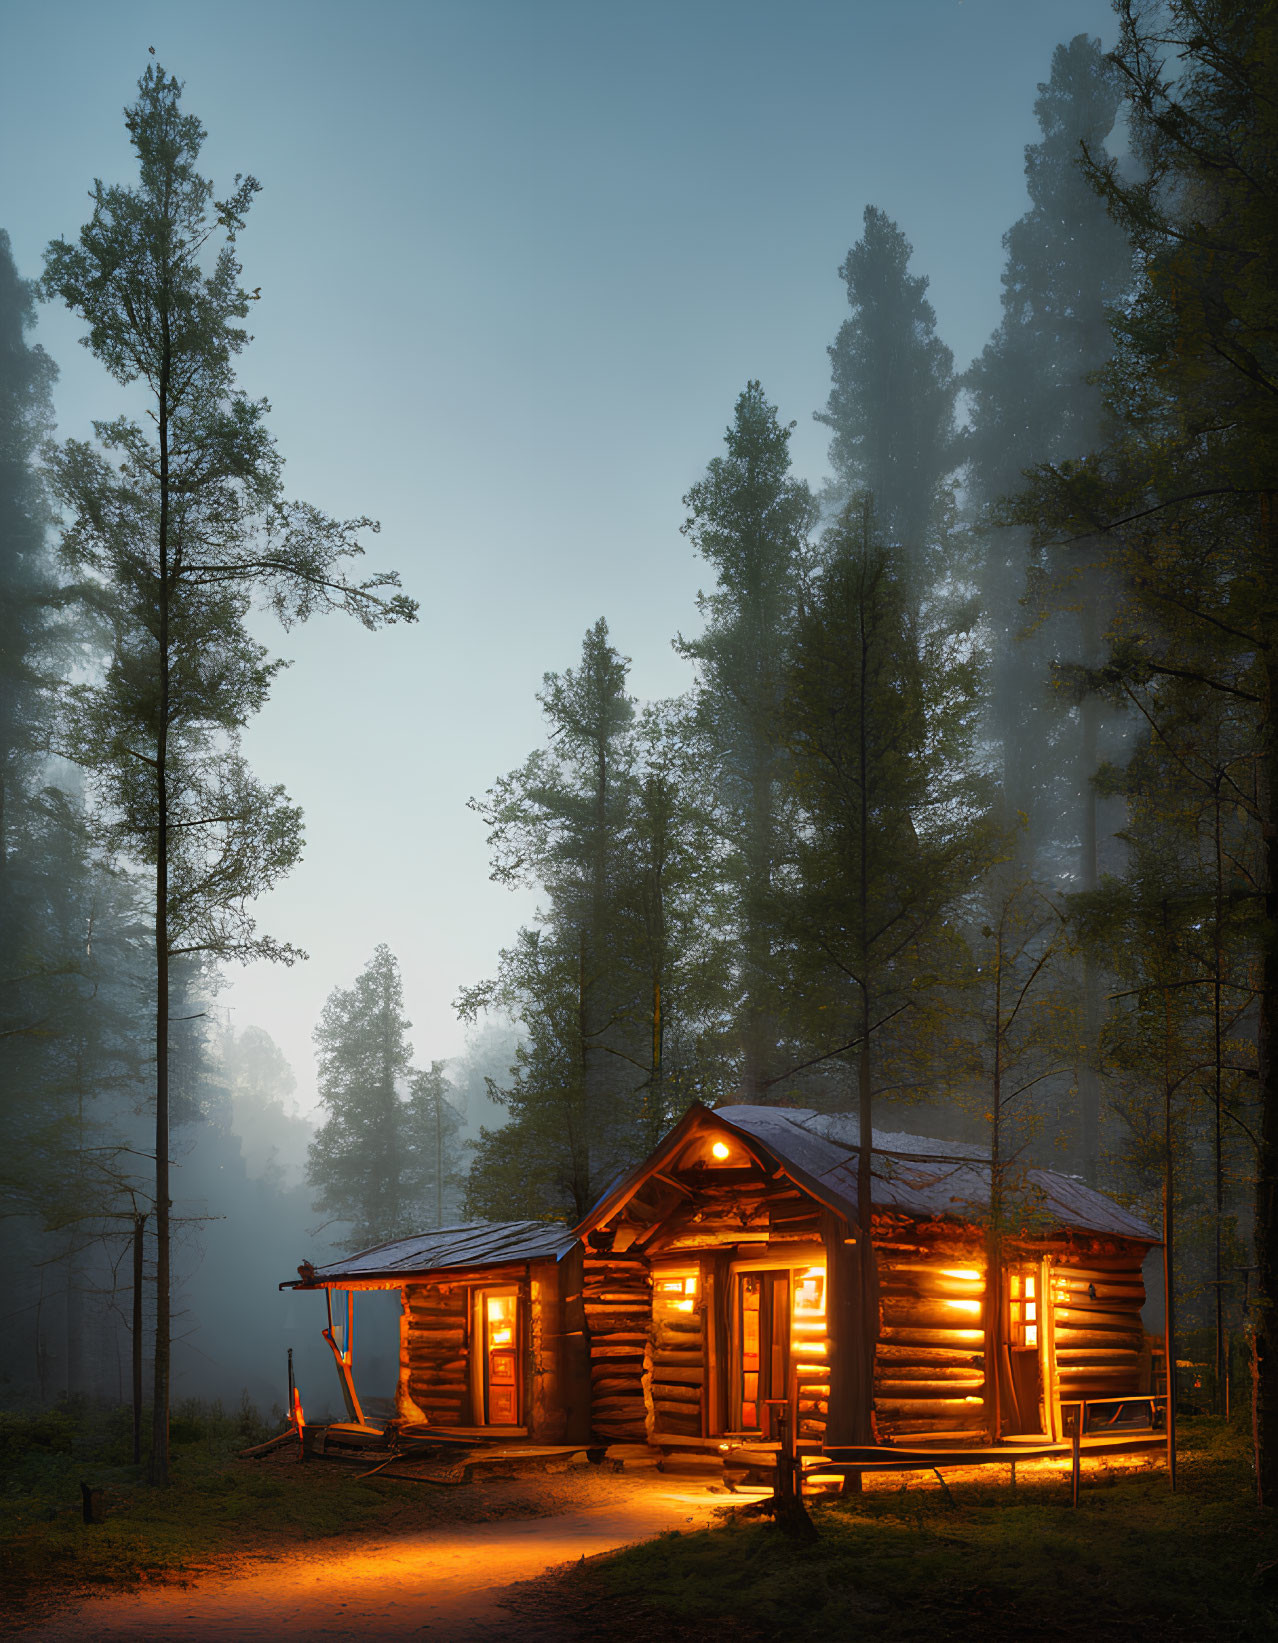 Twilight scene: Warmly lit log cabin amid misty pine trees